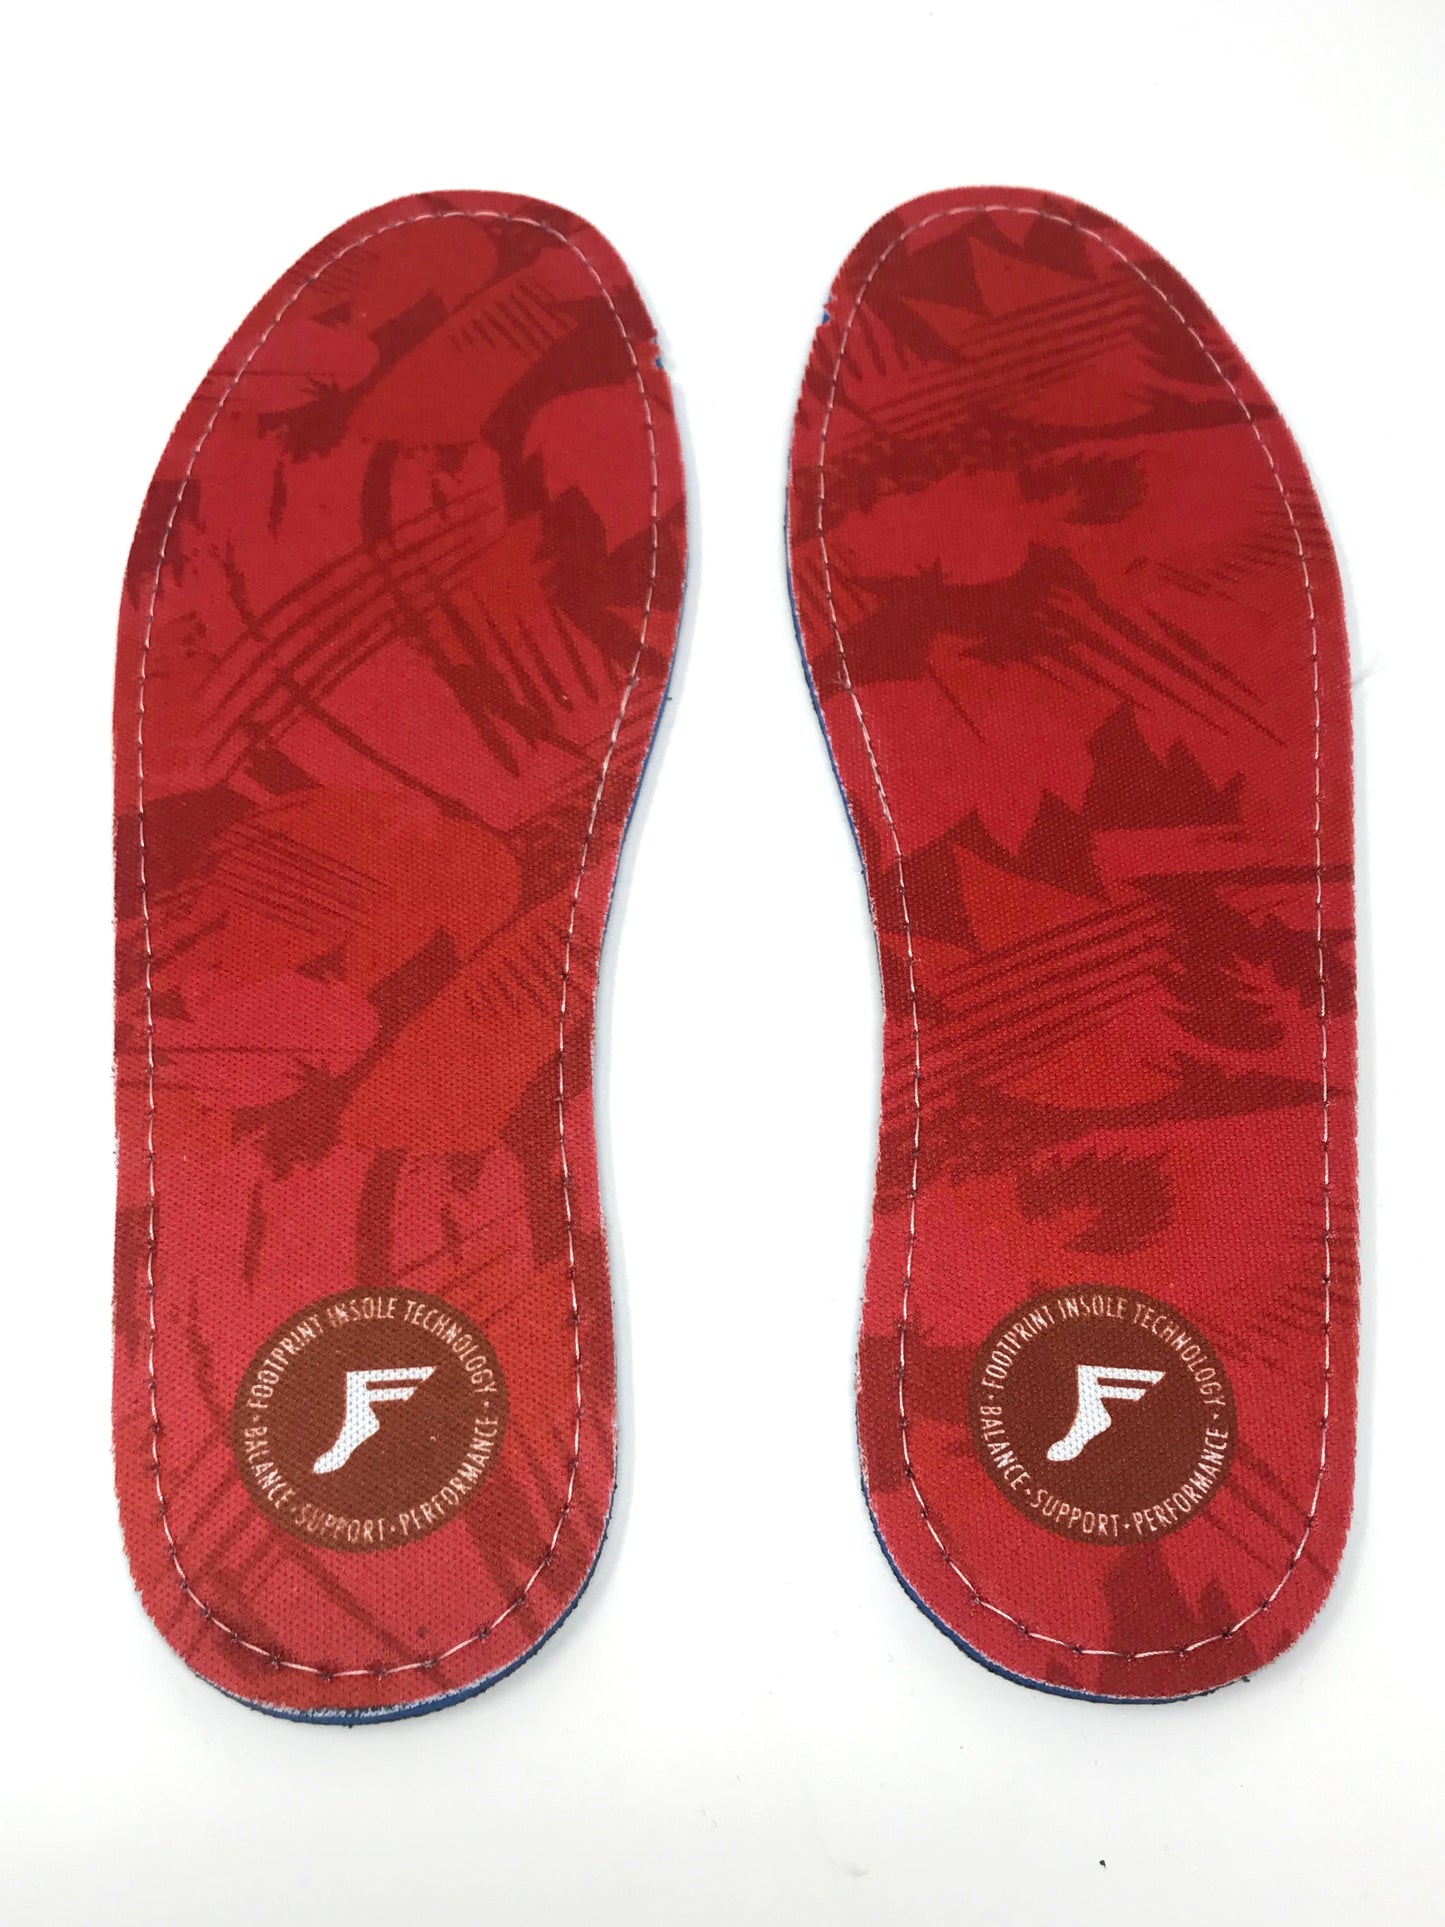 Footprint 'Kingfoam' - Insoles